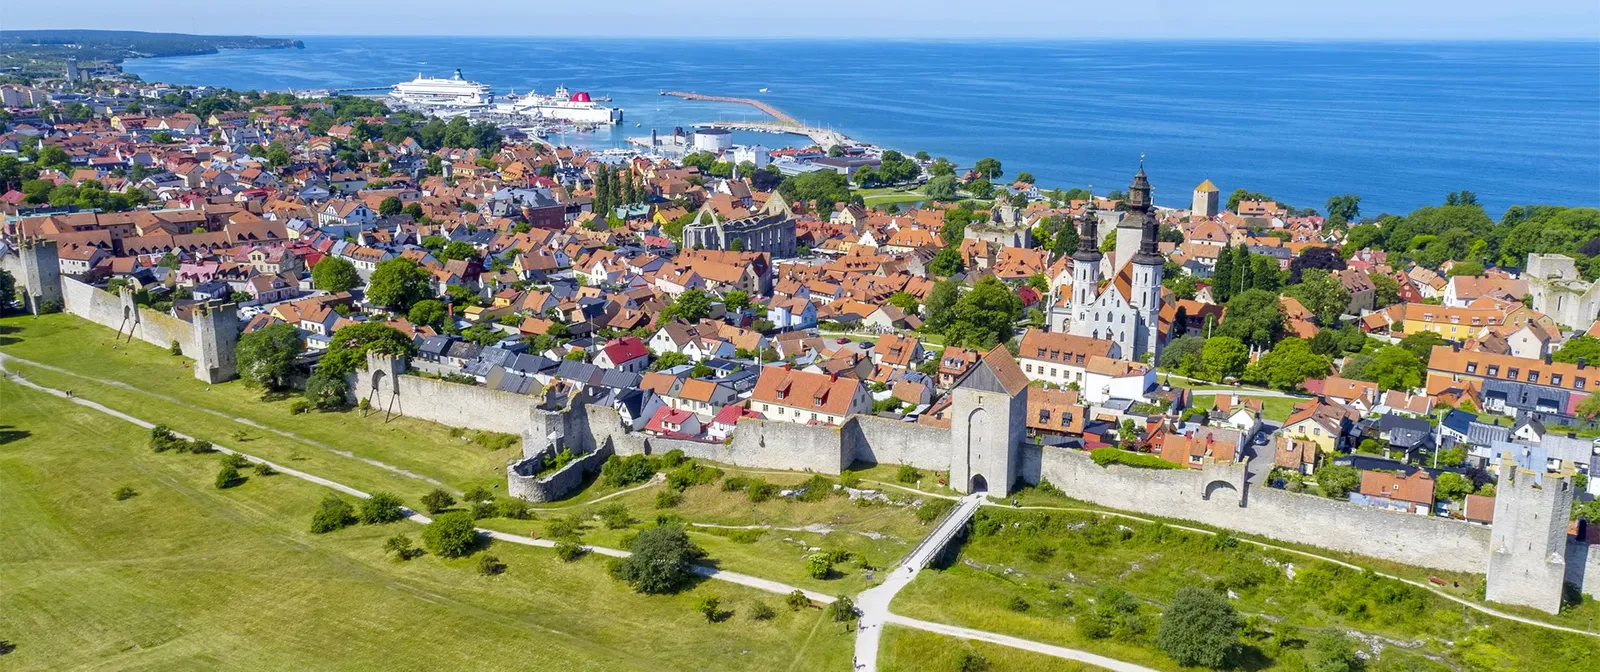 Visby | Gotland Region, Sweden - Rated 3.8